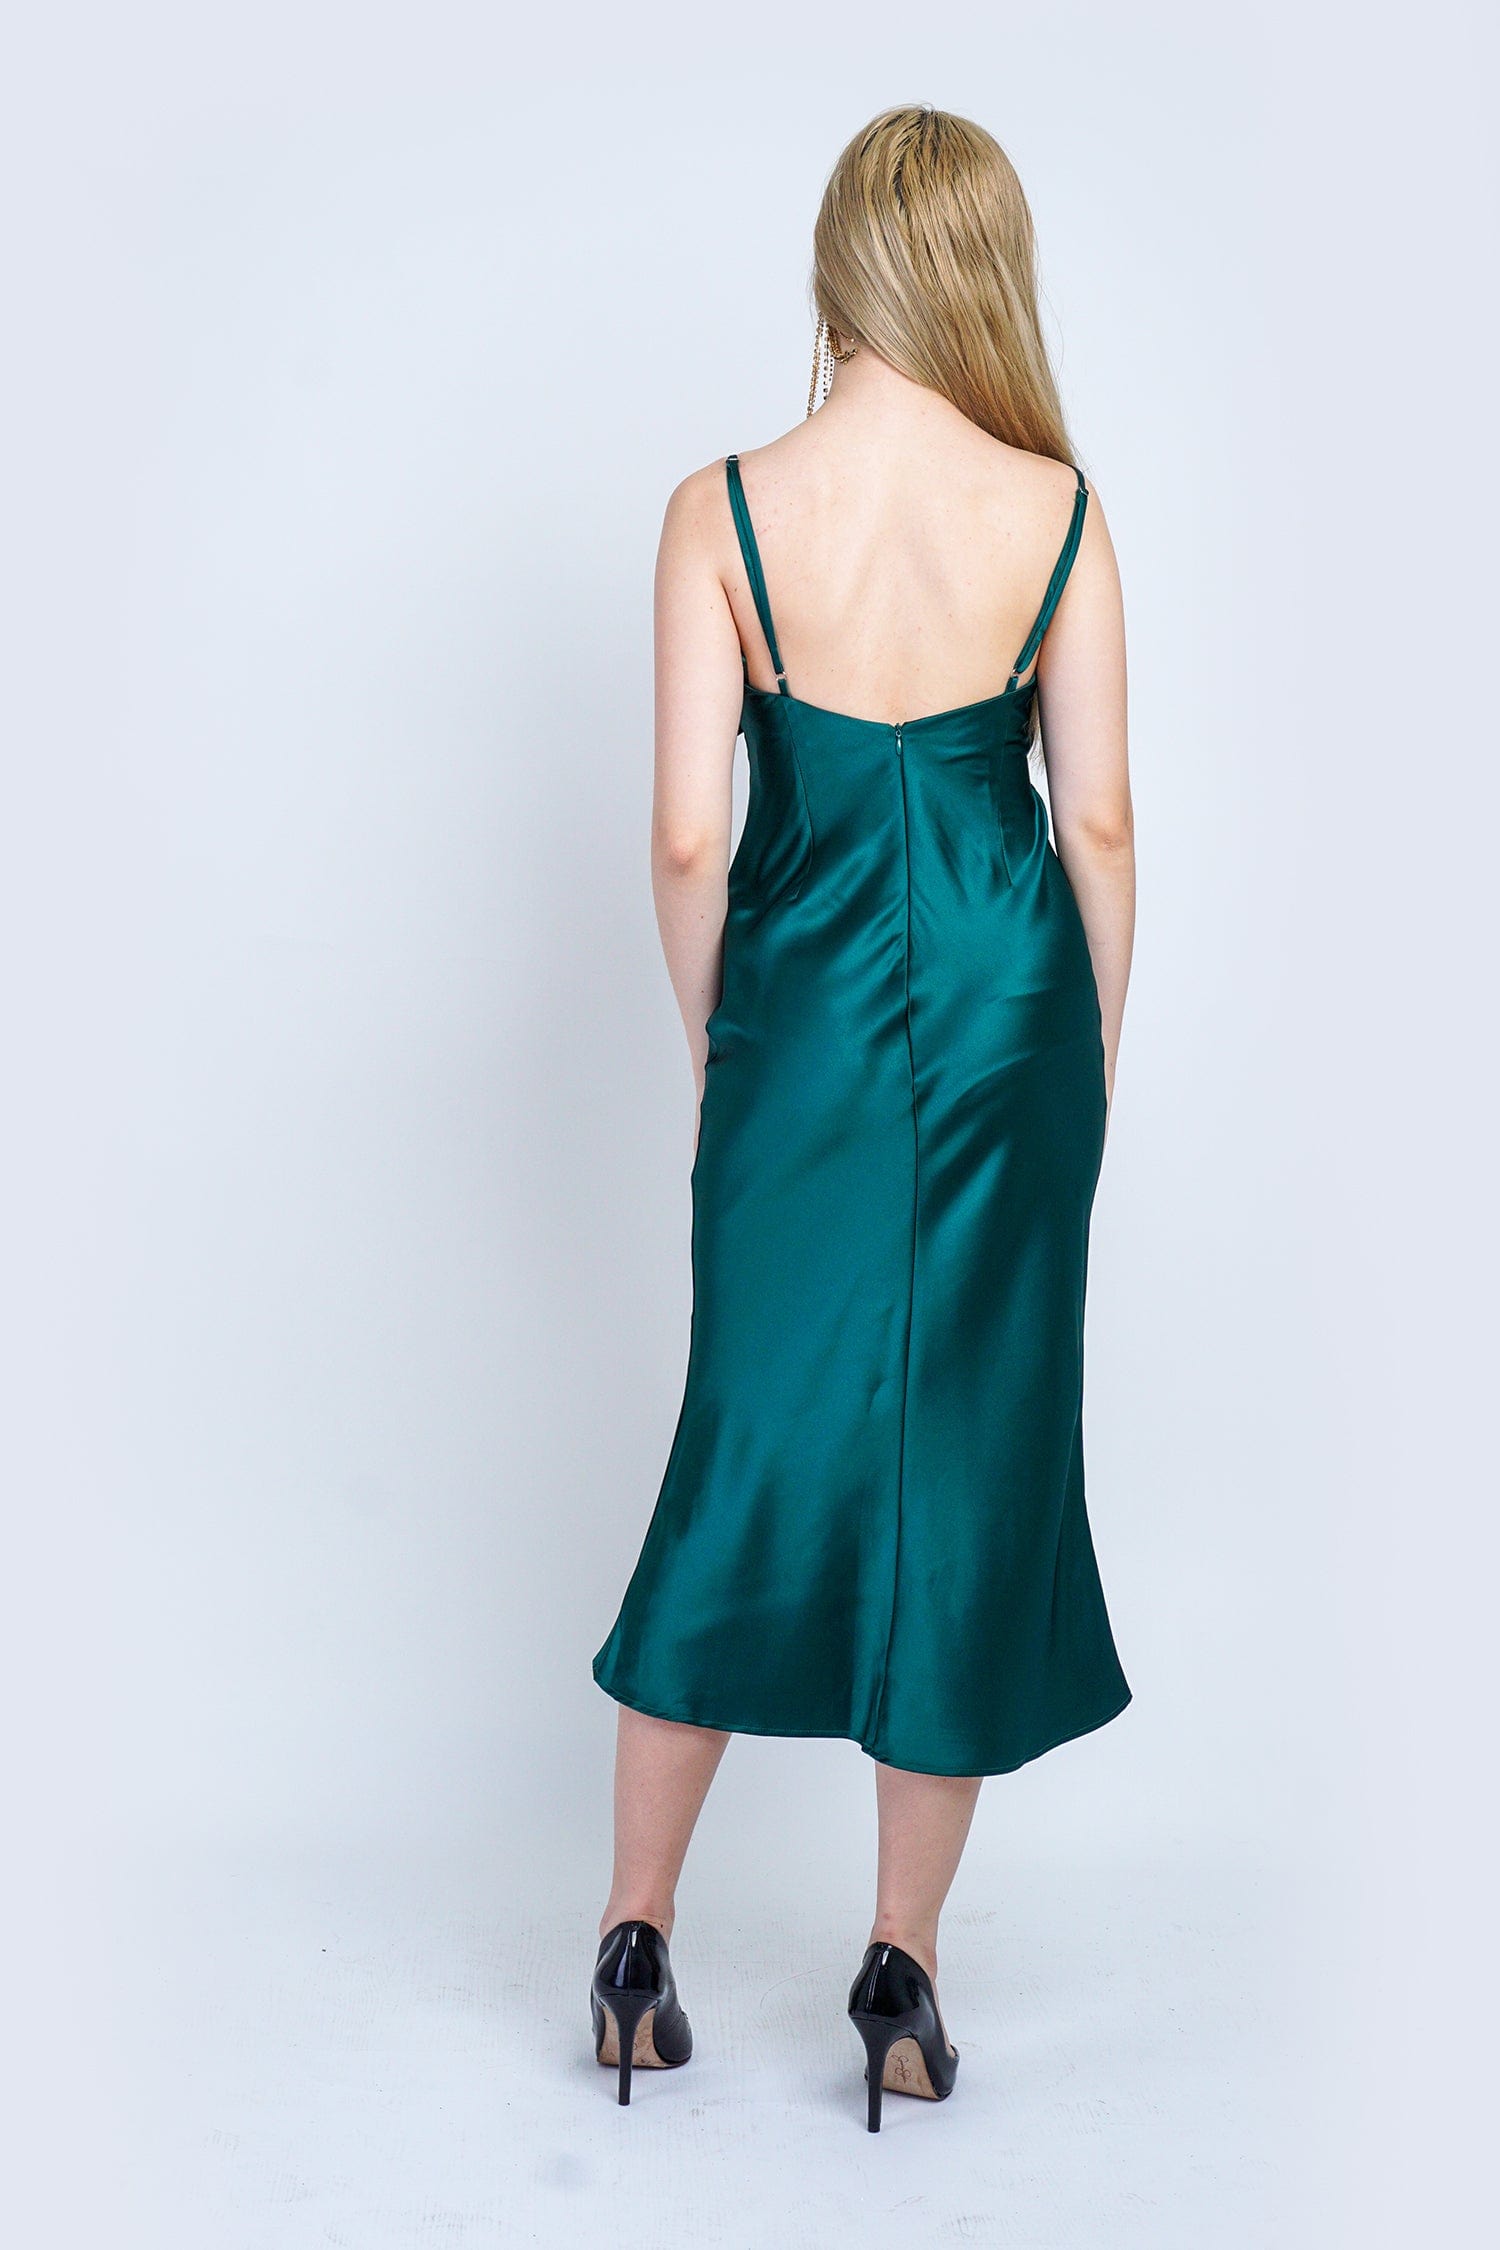 DCD DRESSES Emerald Bow Bias Maxi Dress